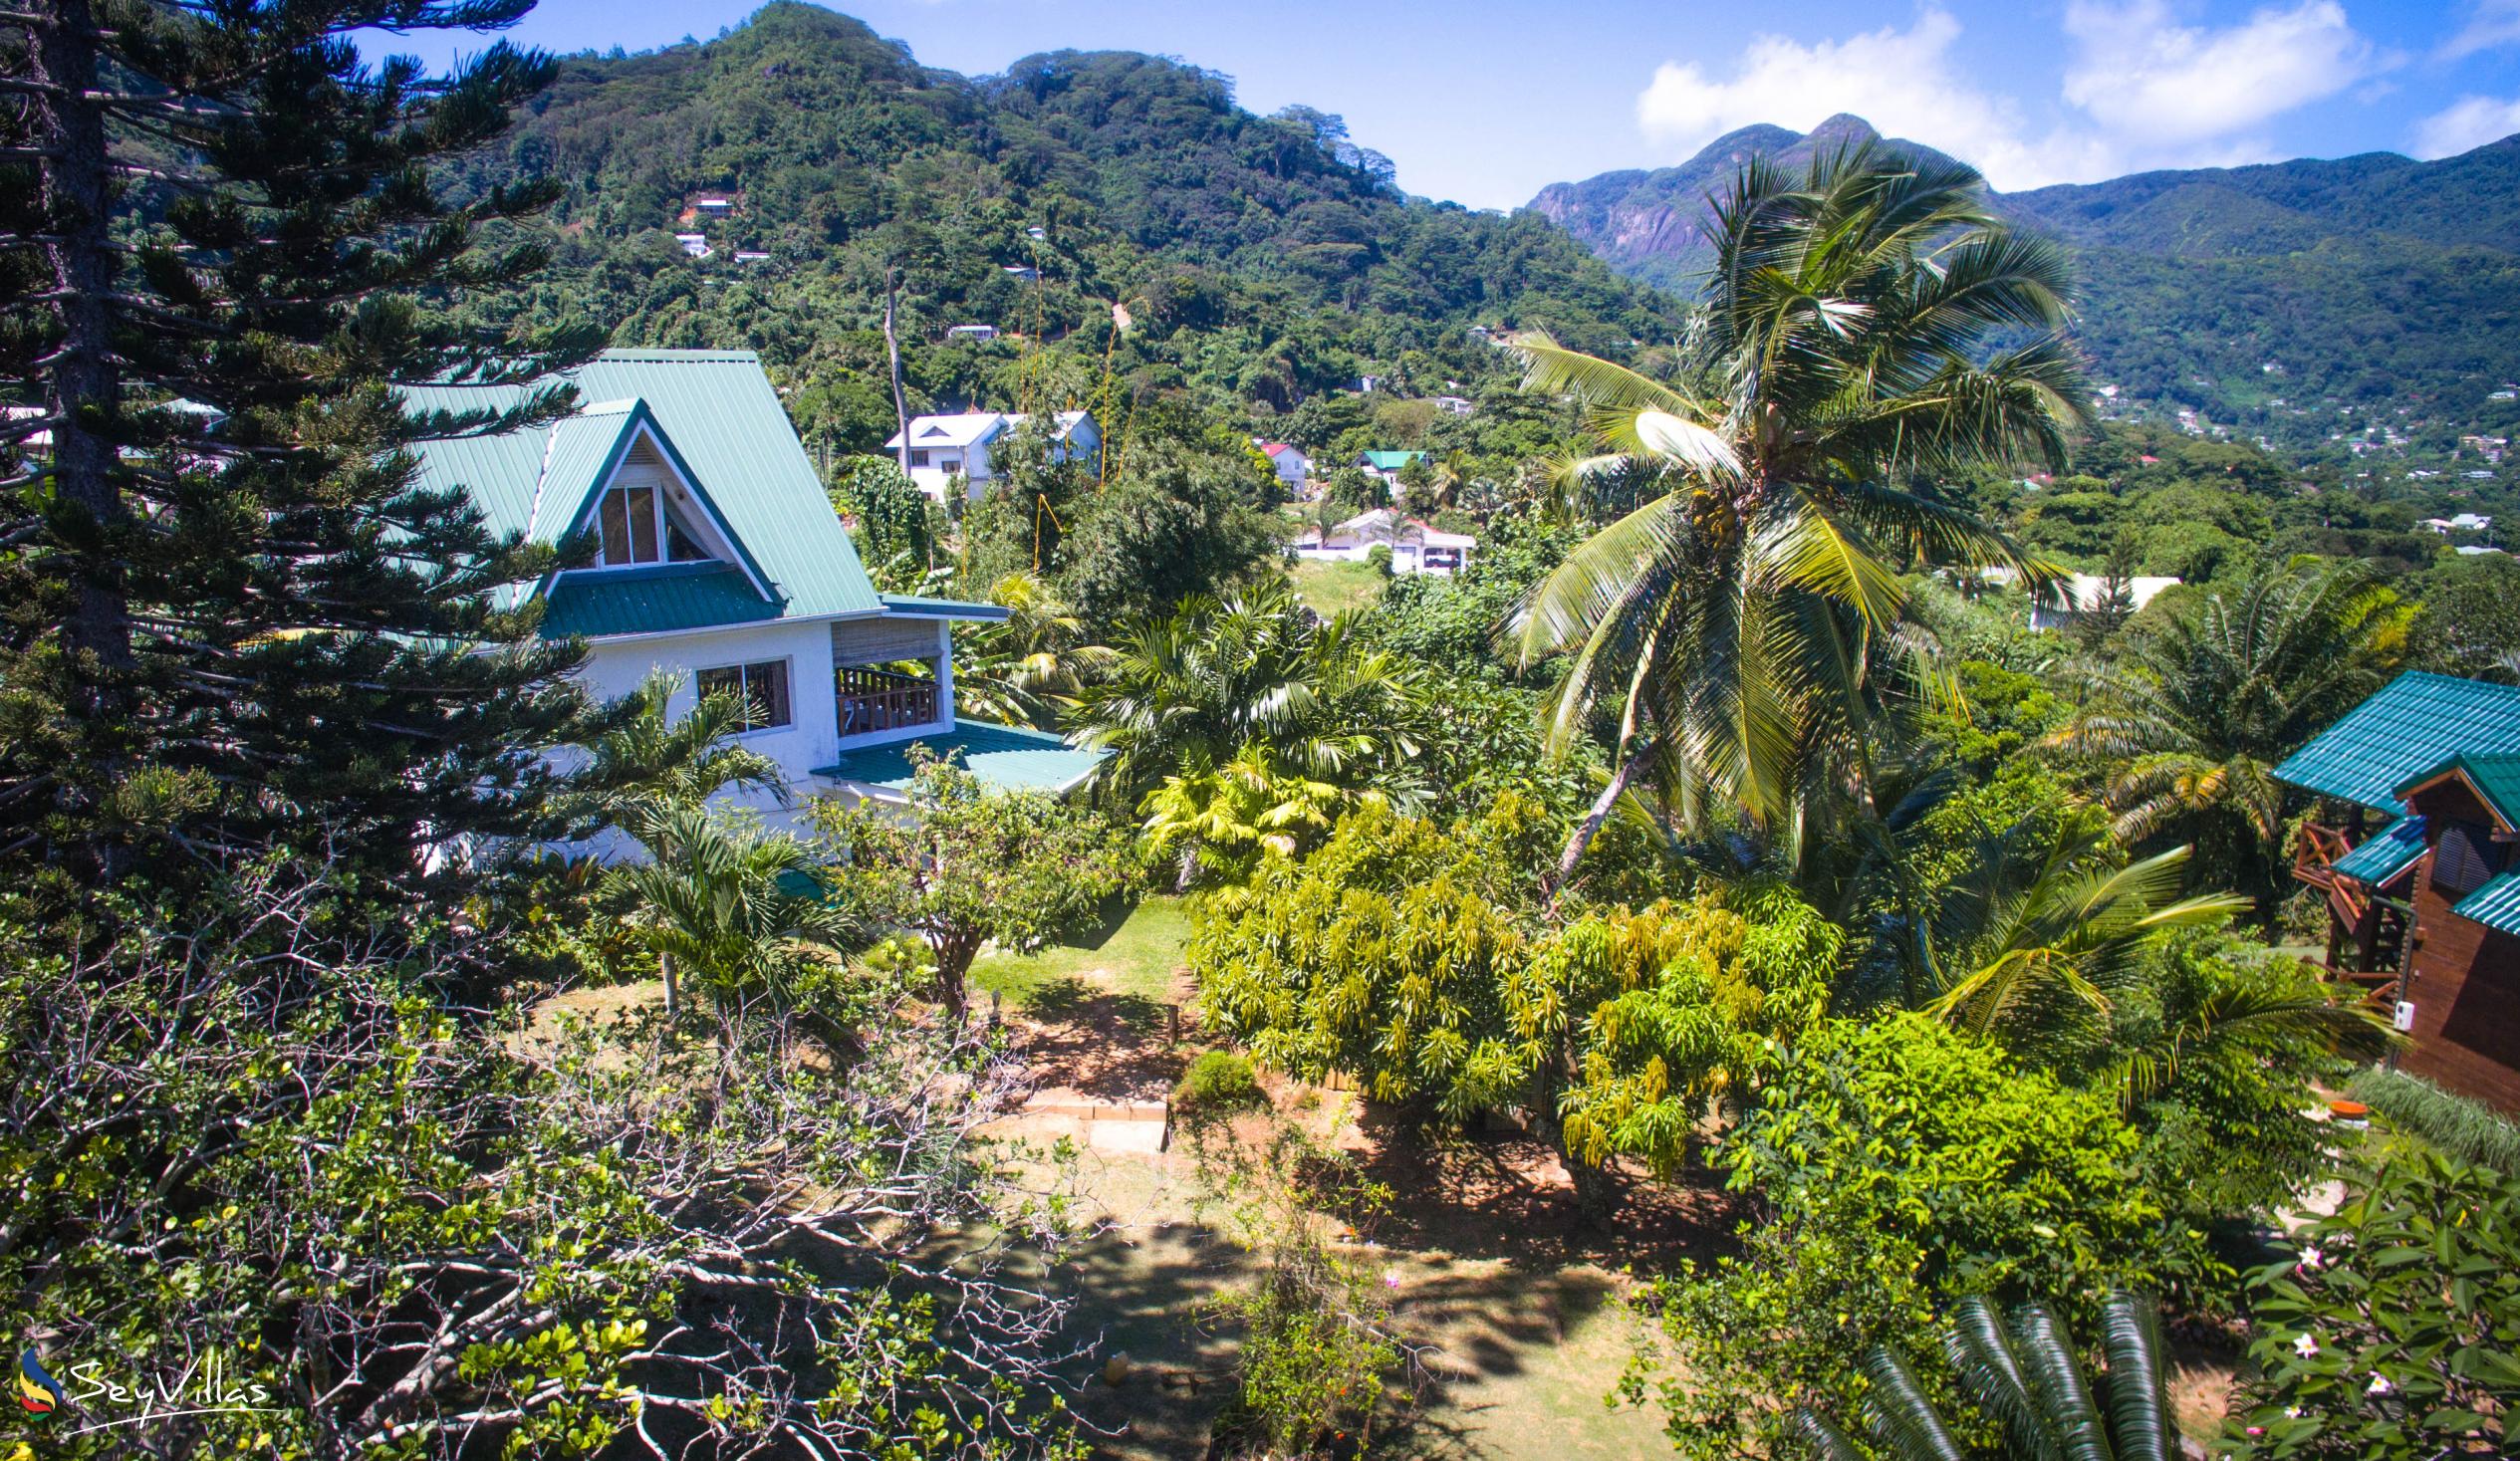 Photo 4: Lemongrass Lodge - Outdoor area - Mahé (Seychelles)